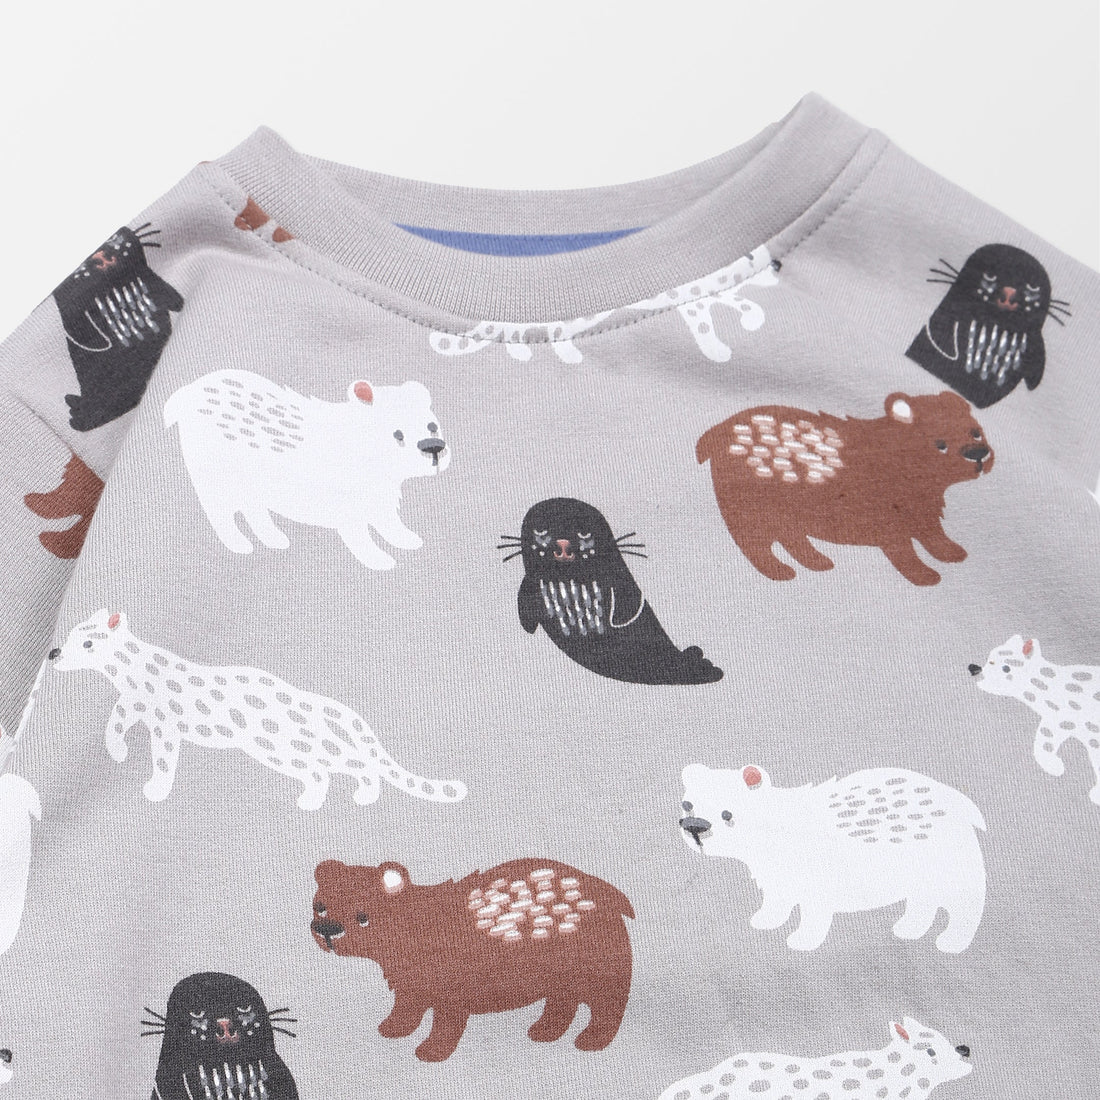 Animals Sweatshirt